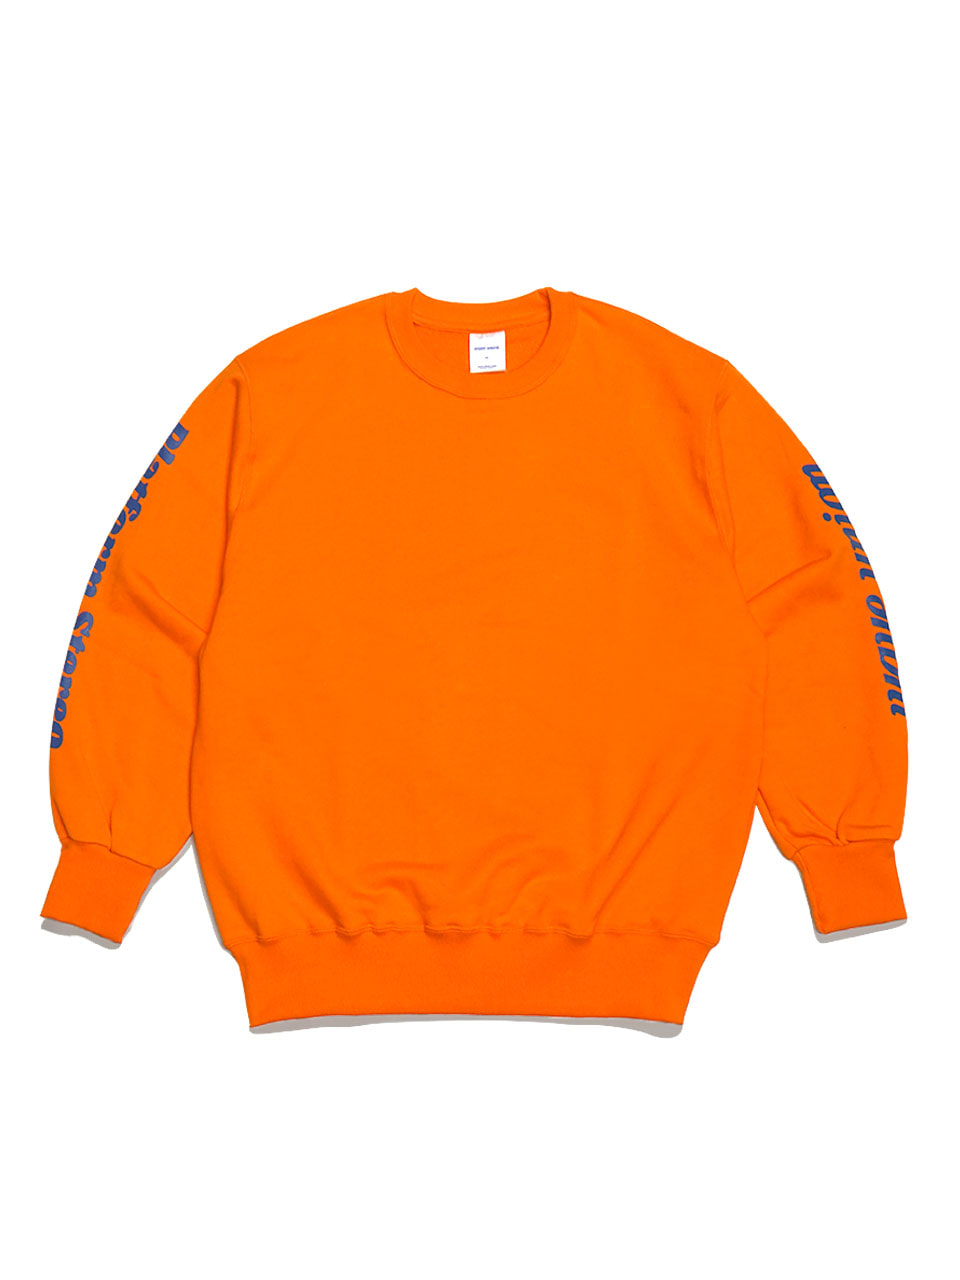 Platformstereo Vehicle sweatshirt orange